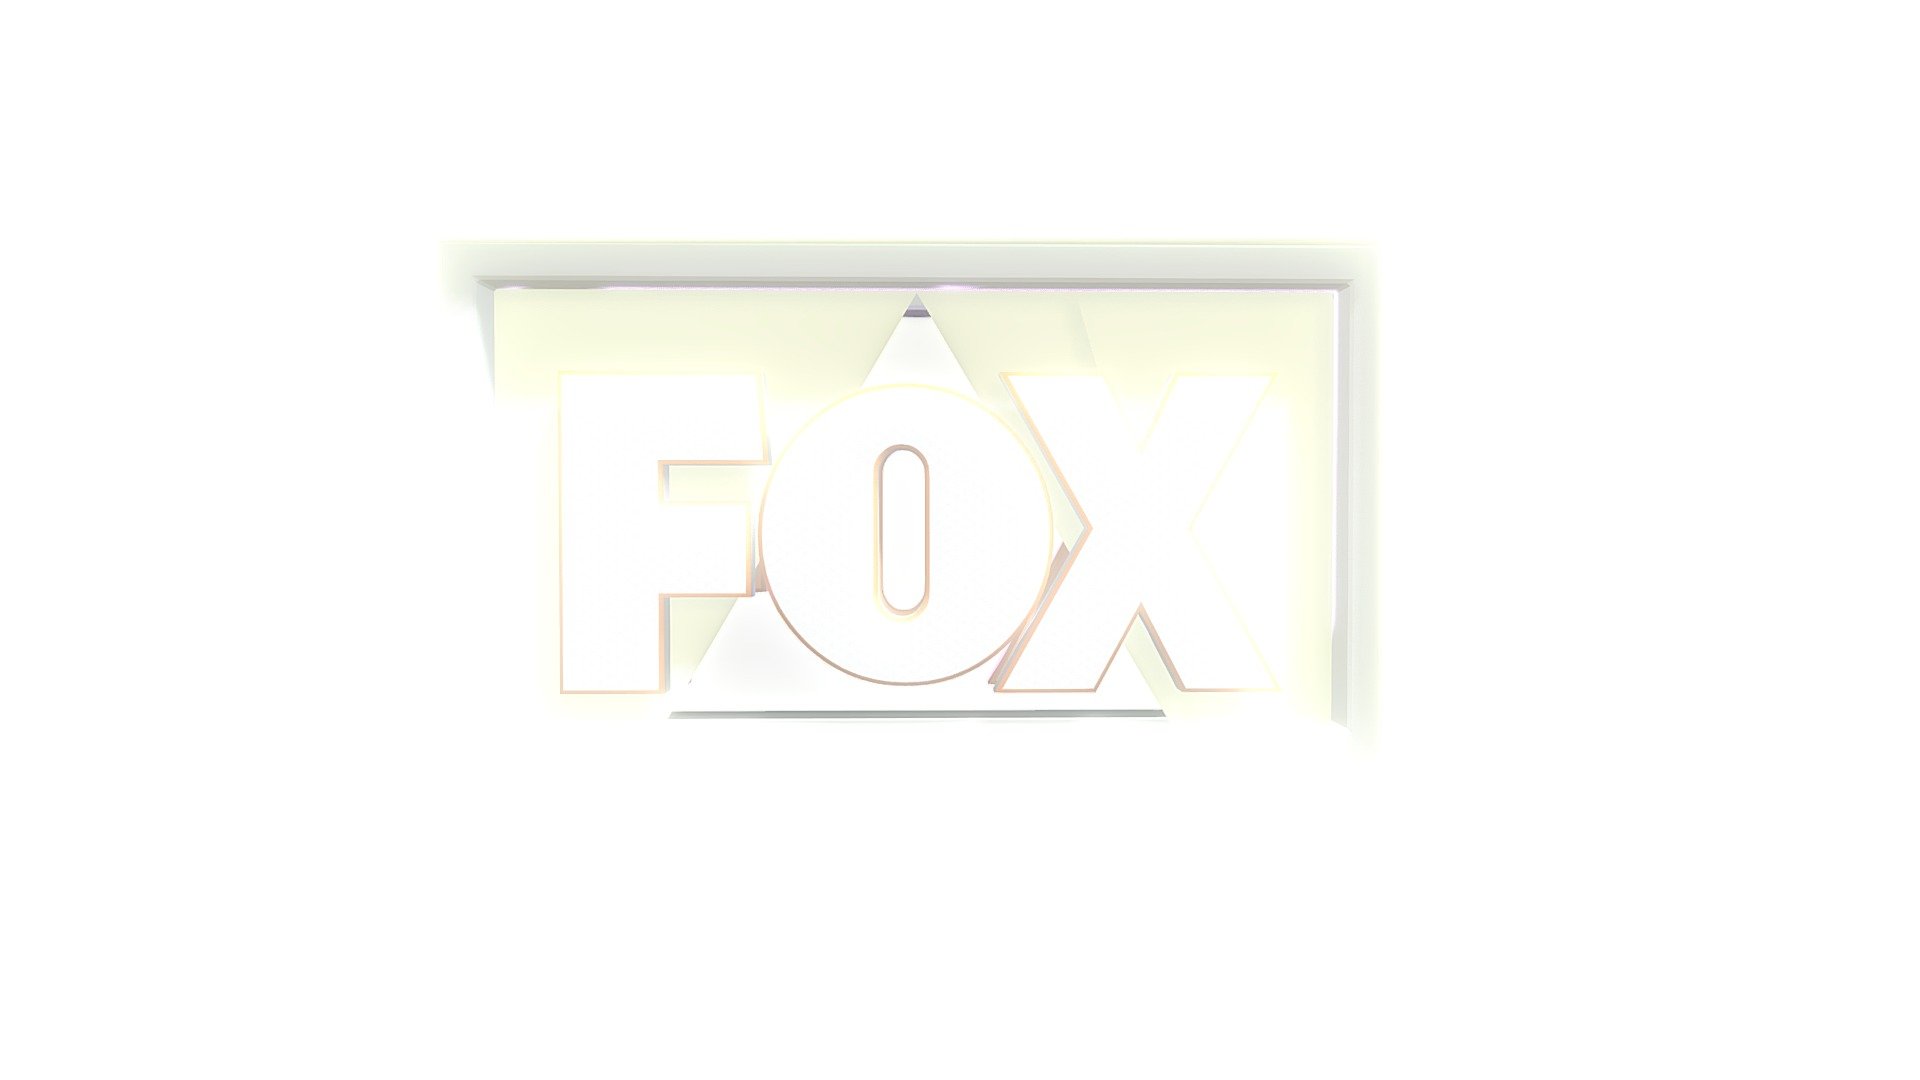 fox network logo